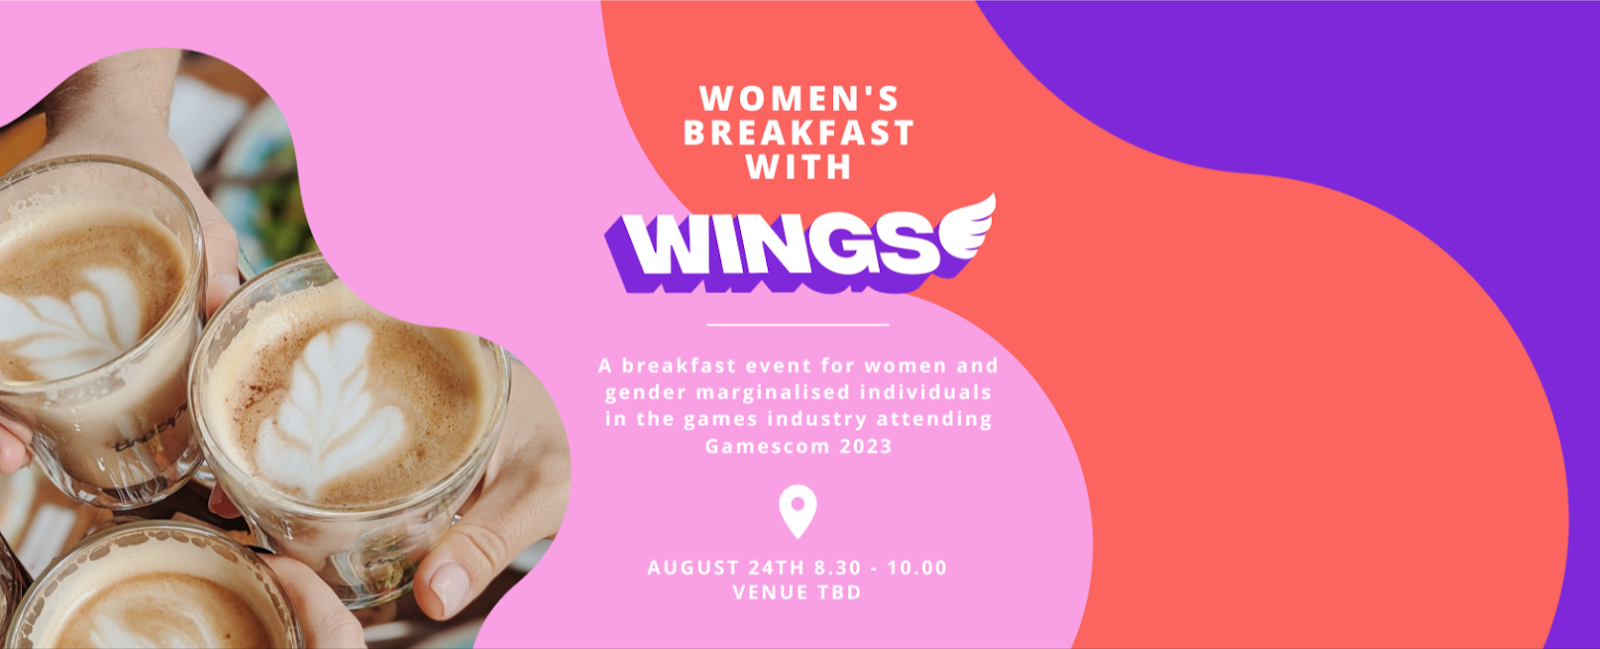 Women’s Breakfast with WINGS gamescom networking event